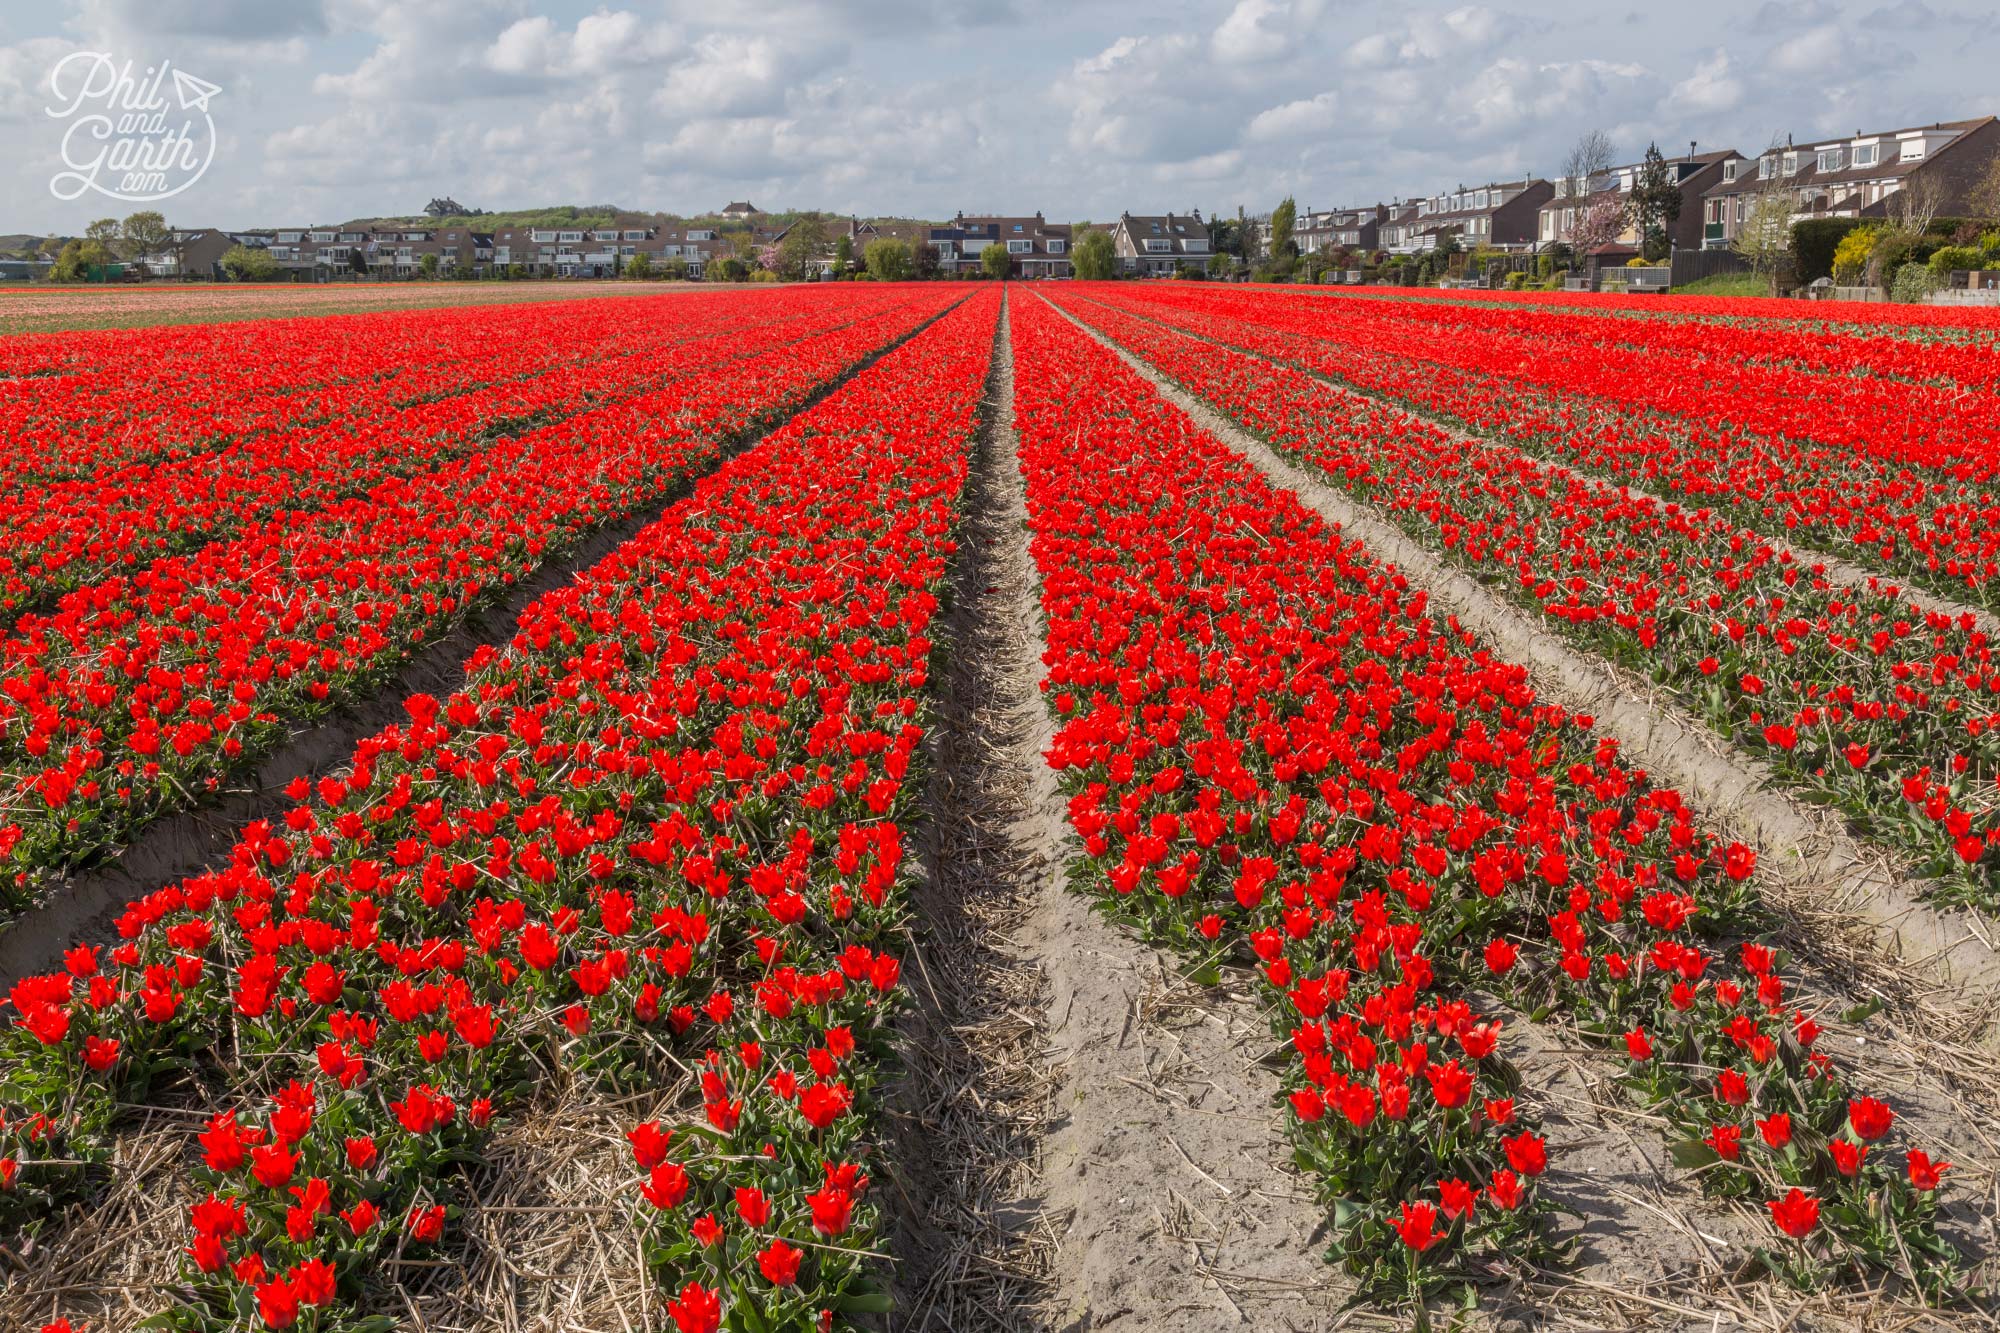 Another carpet of red tulips near Keukenhof